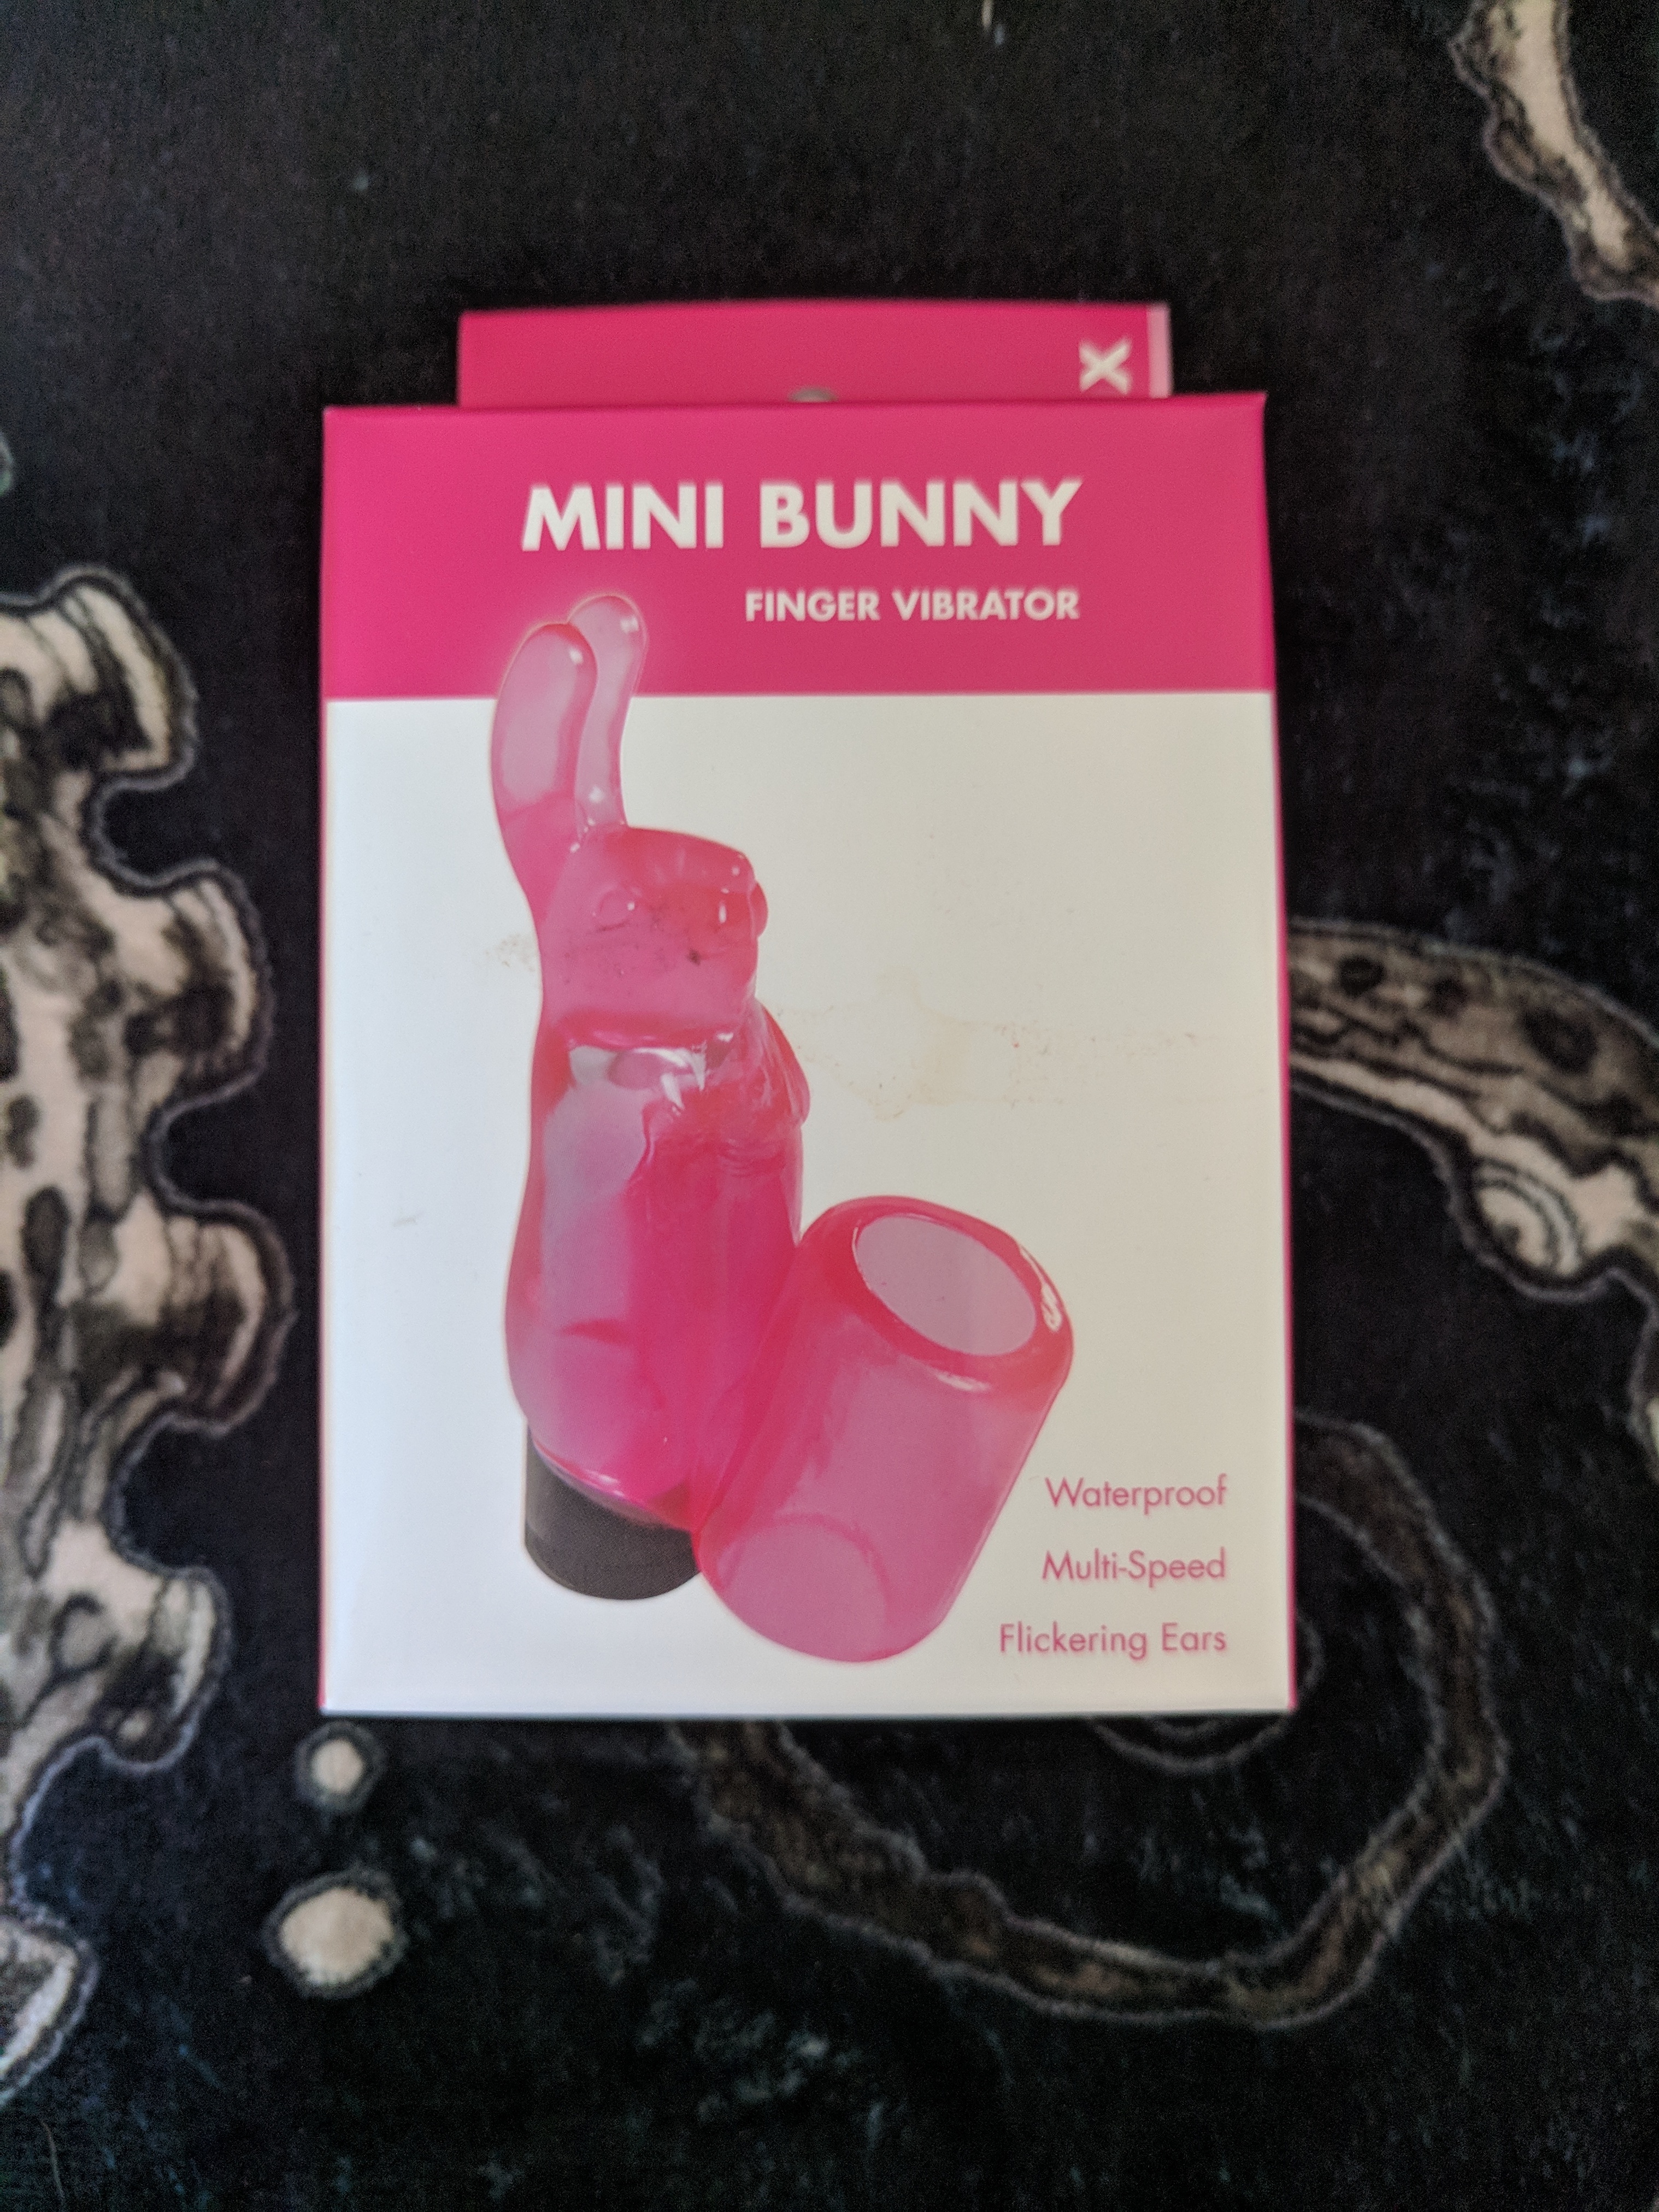 Pocket bunny vibrator external box, showing the toy